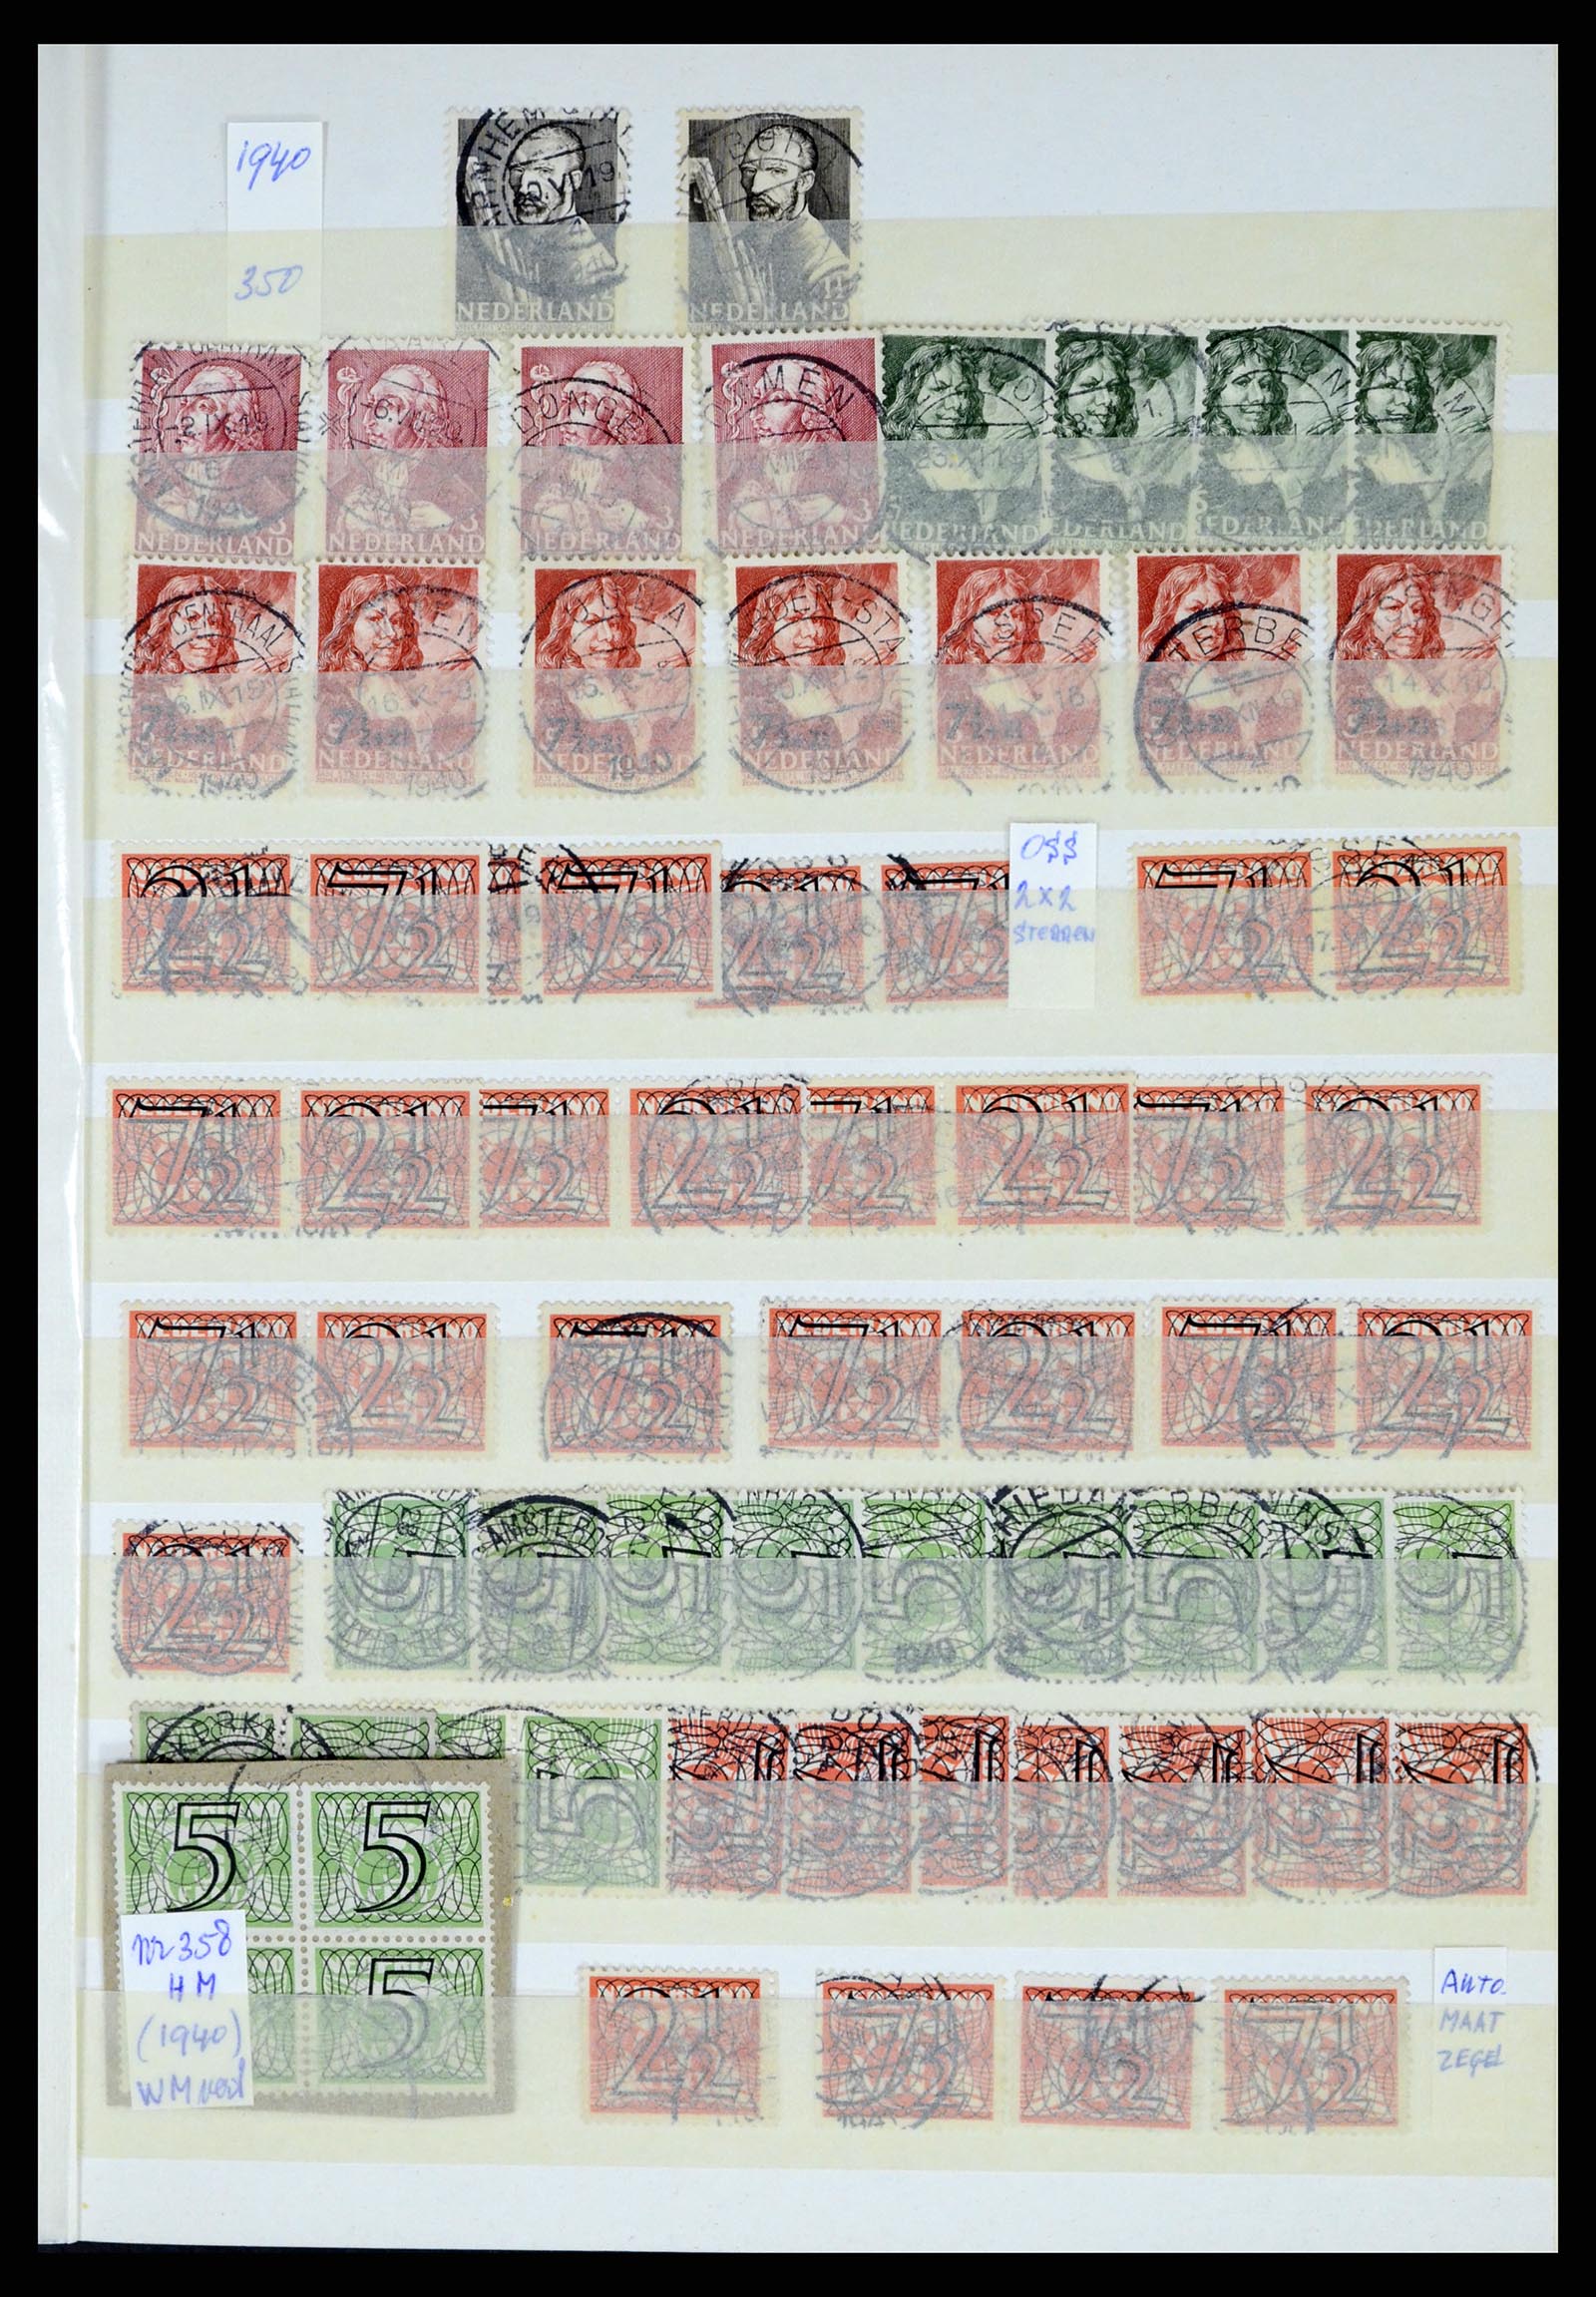 37424 029 - Stamp collection 37424 Netherlands shortbar cancels.